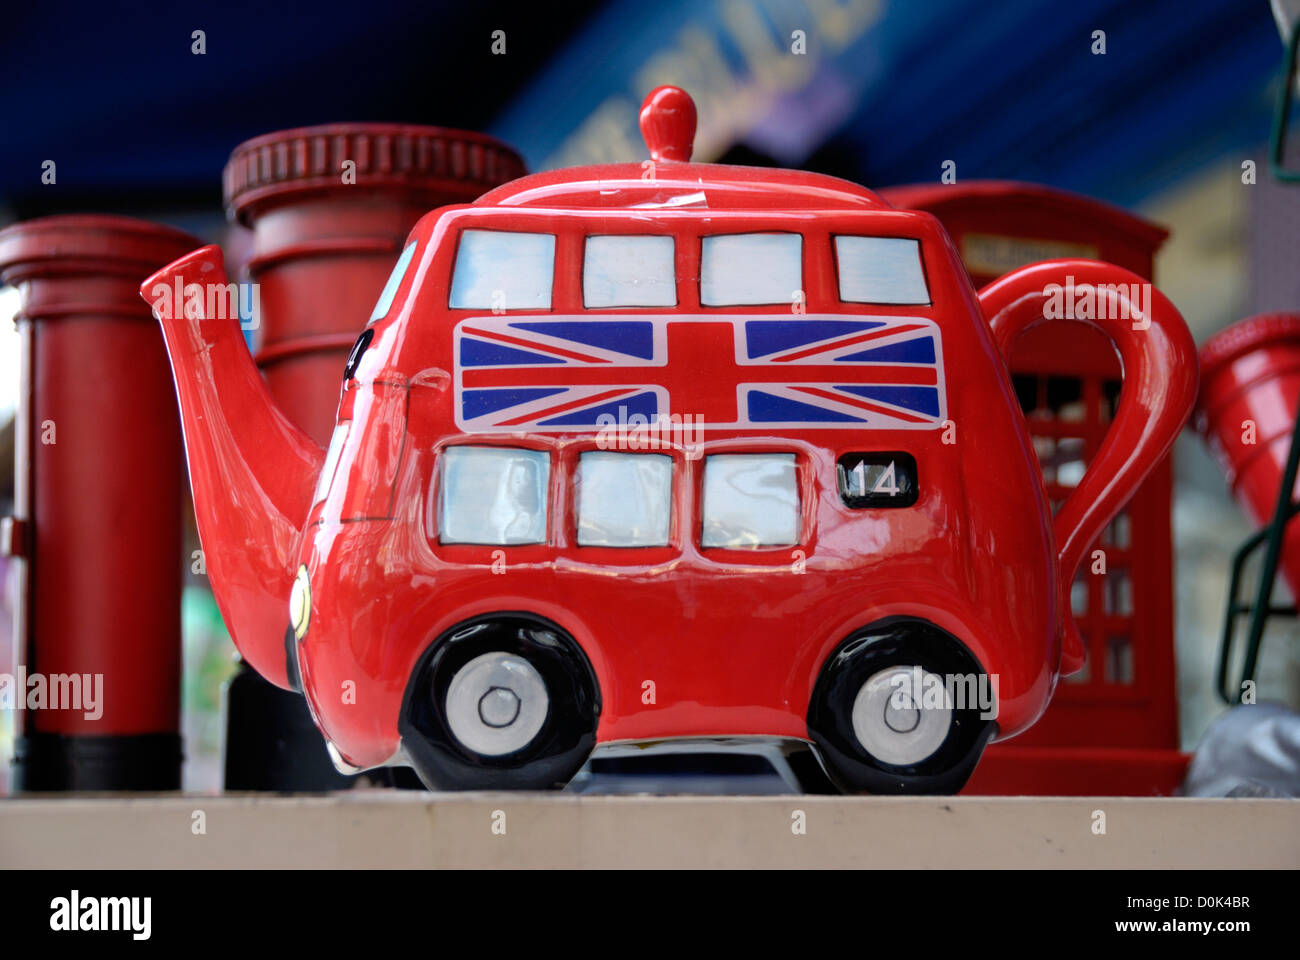 A red double decker bus souvenir teapot for sale in Portobello market. Stock Photo